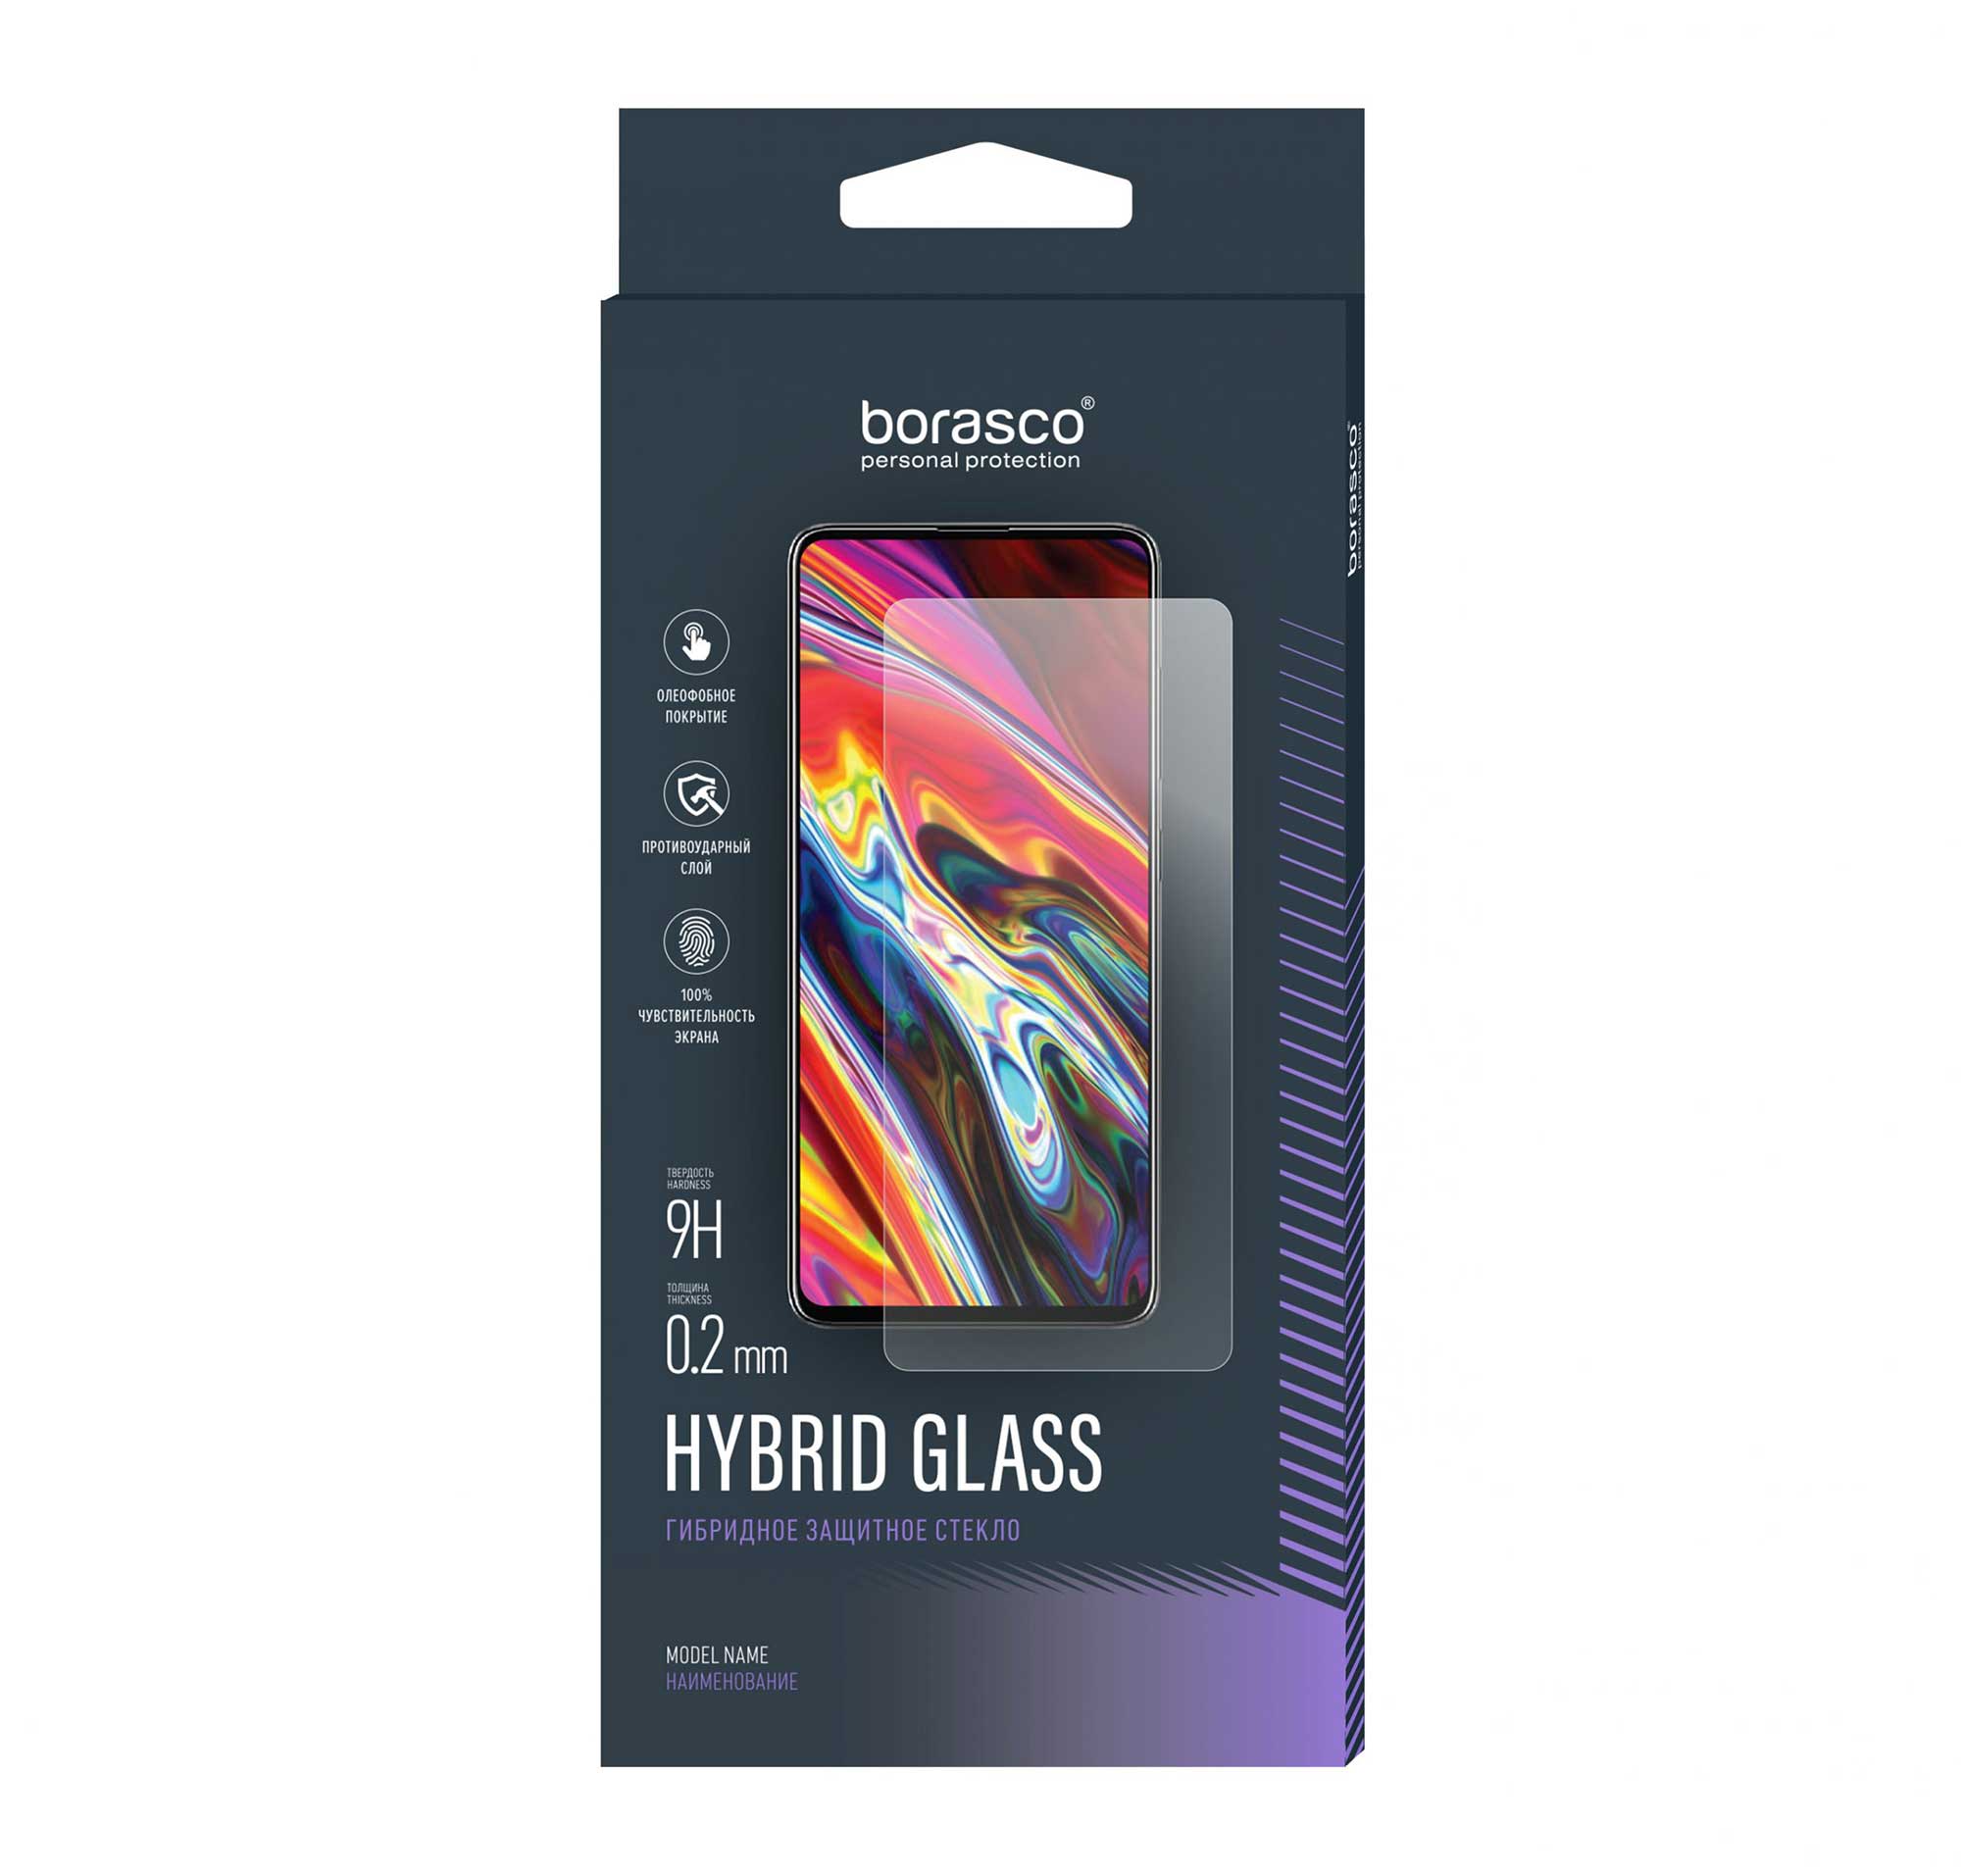 Защитное стекло Hybrid Glass для Universal 19:9 5.7